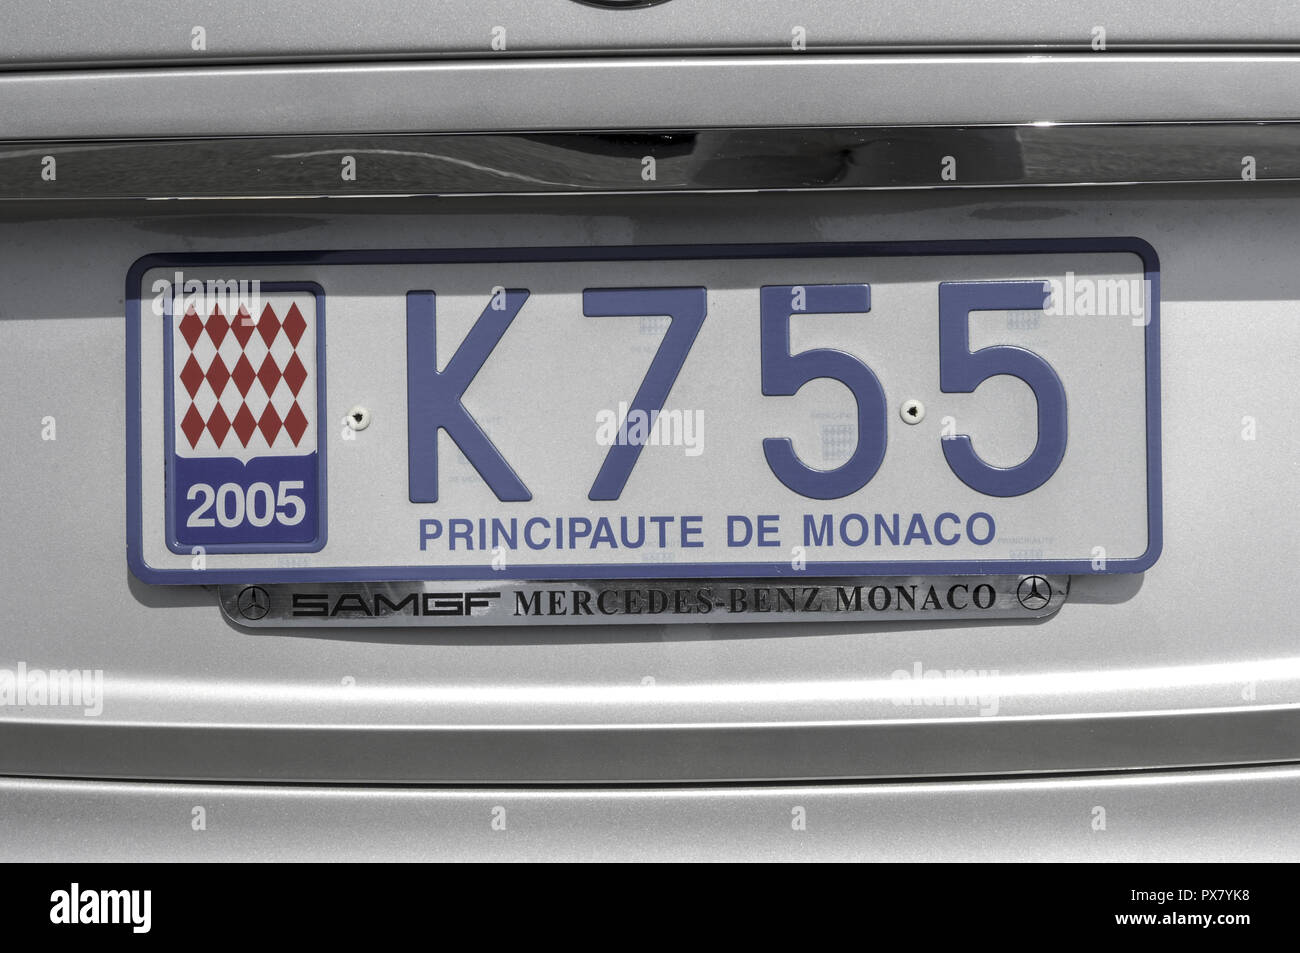 Monaco, number plate Stock Photo - Alamy